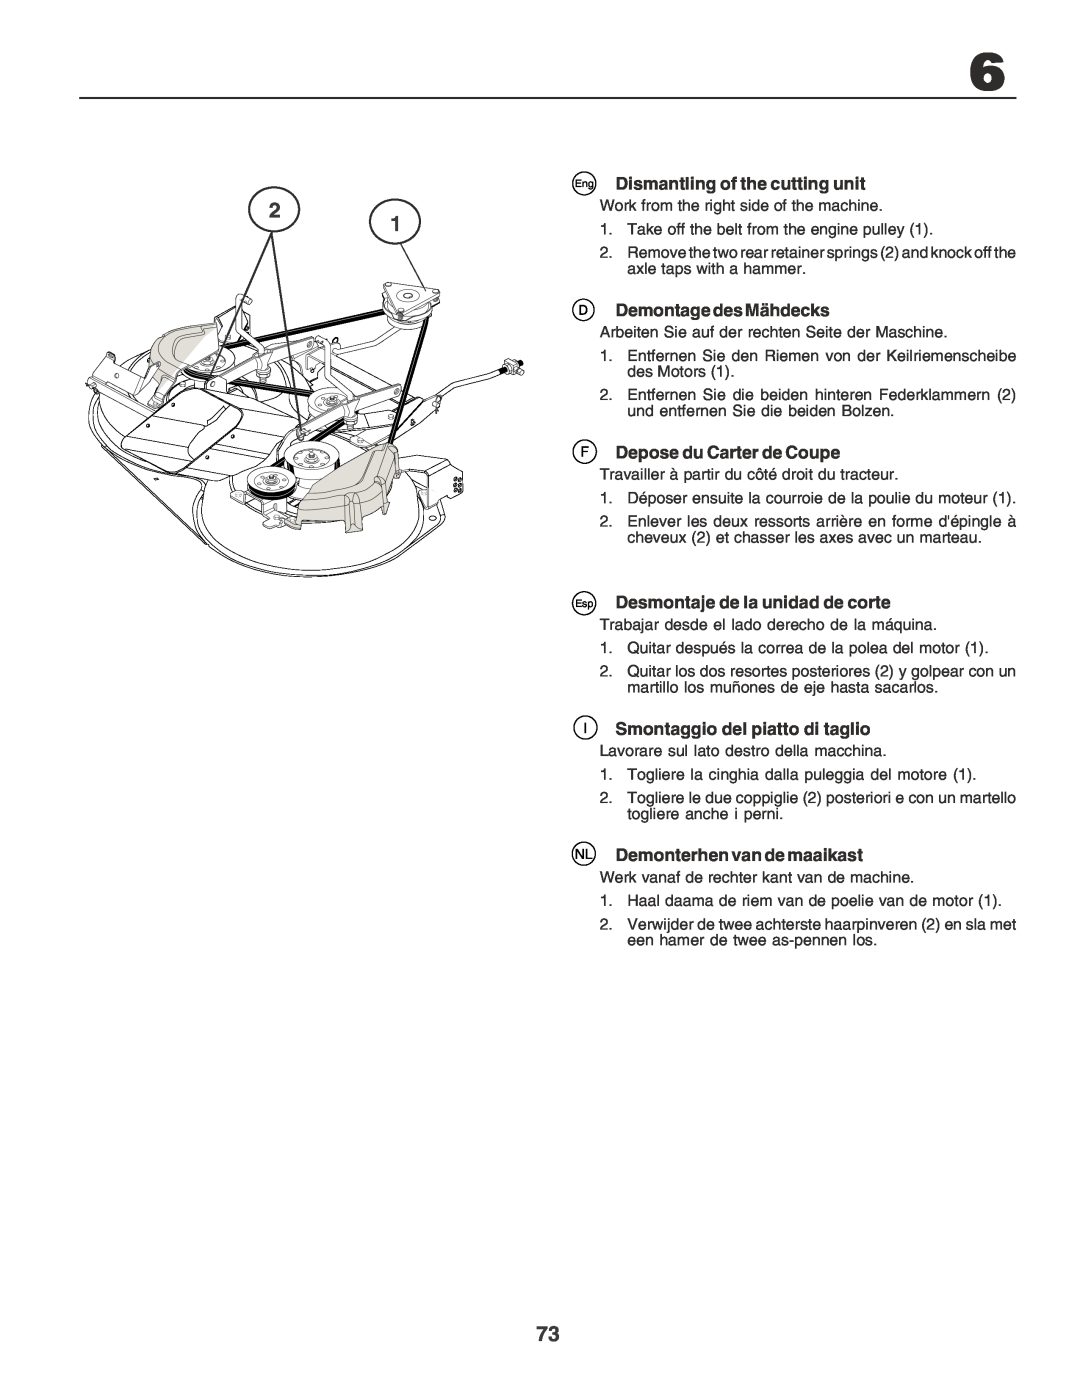 Husqvarna CTH170 instruction manual Dismantling of the cutting unit, Demontage des Mähdecks, Depose du Carter de Coupe 